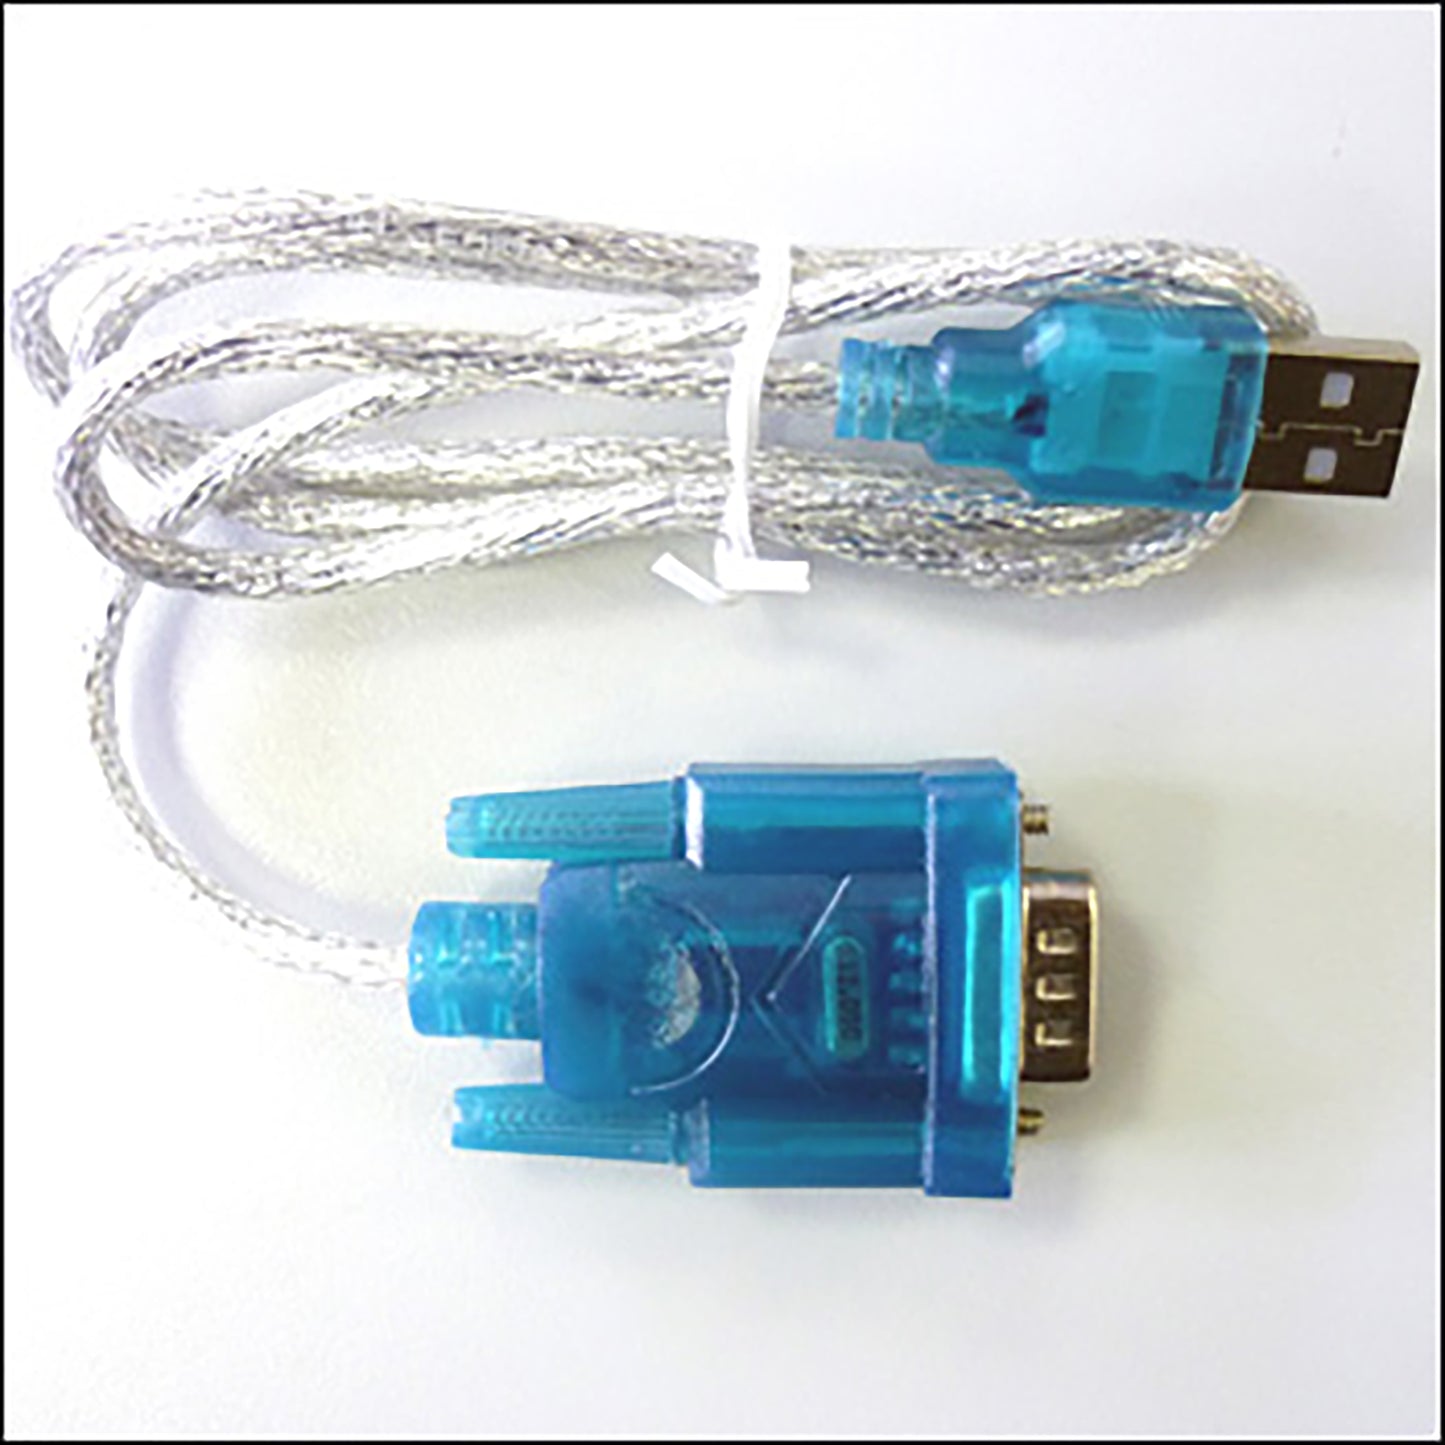 MA8050 - переходник USB-COM (RS232C)